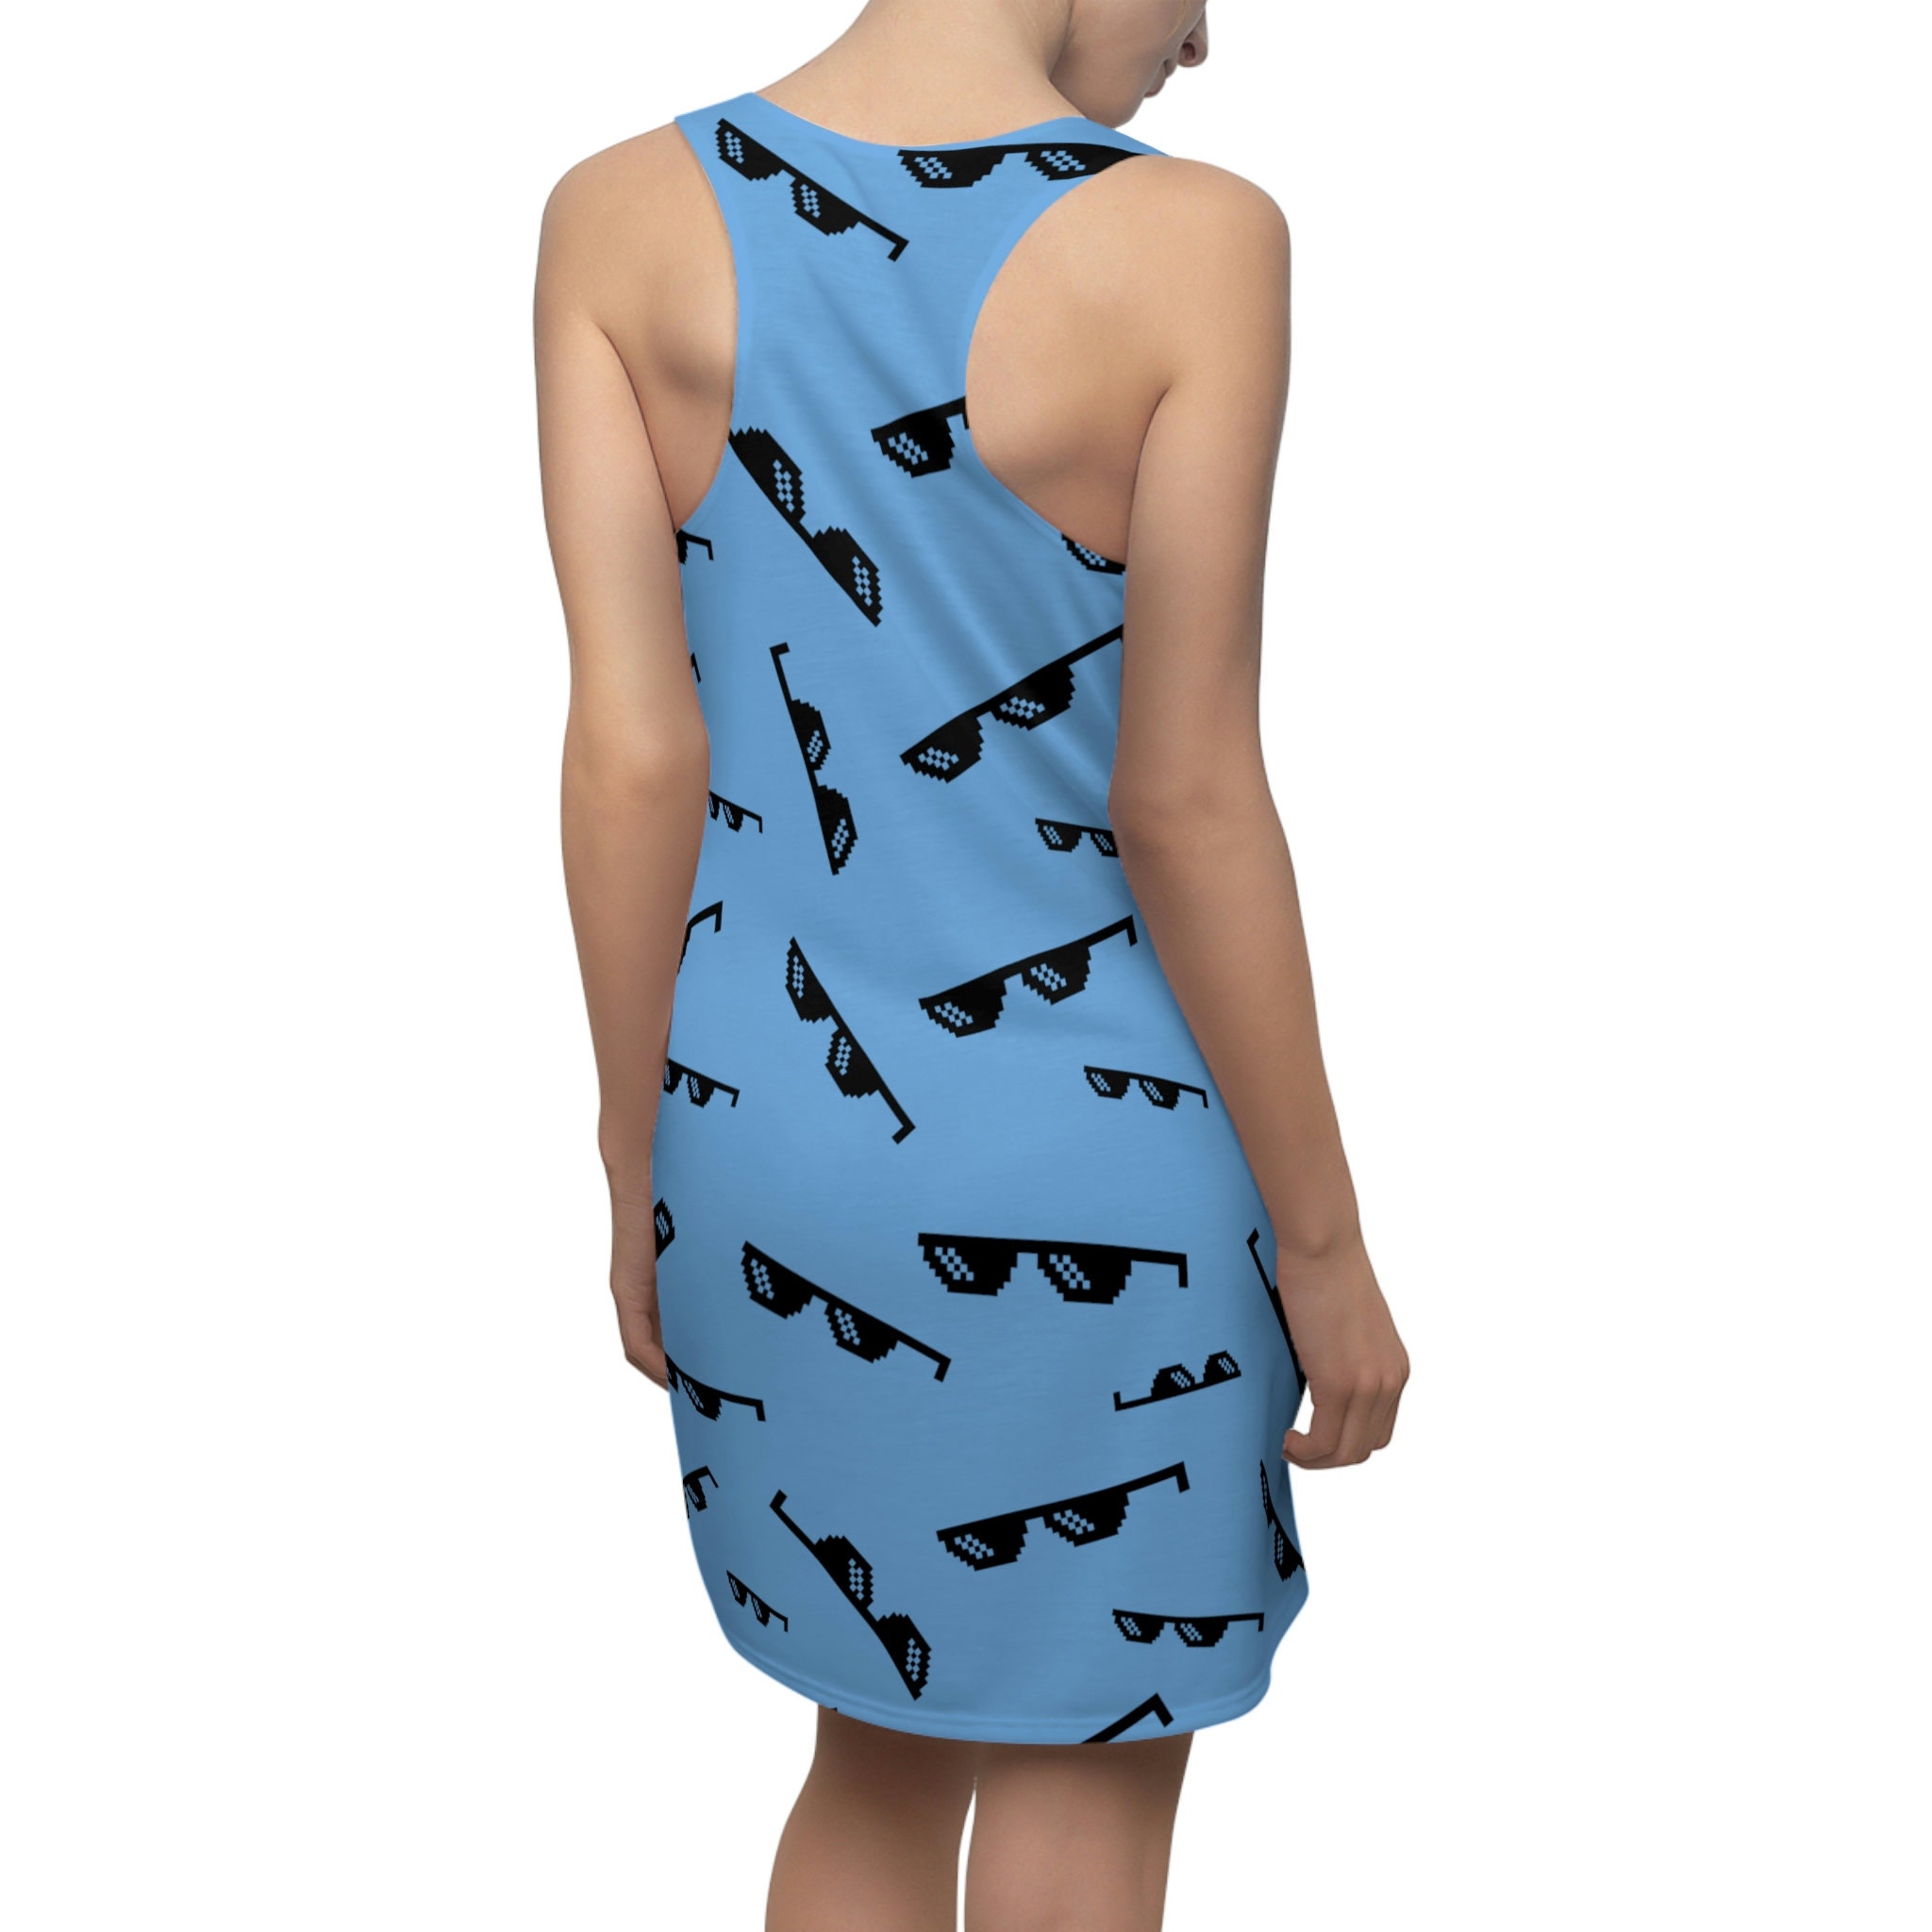 Light Blue Sunglasses Women's Cut & Sew Racerback Dress